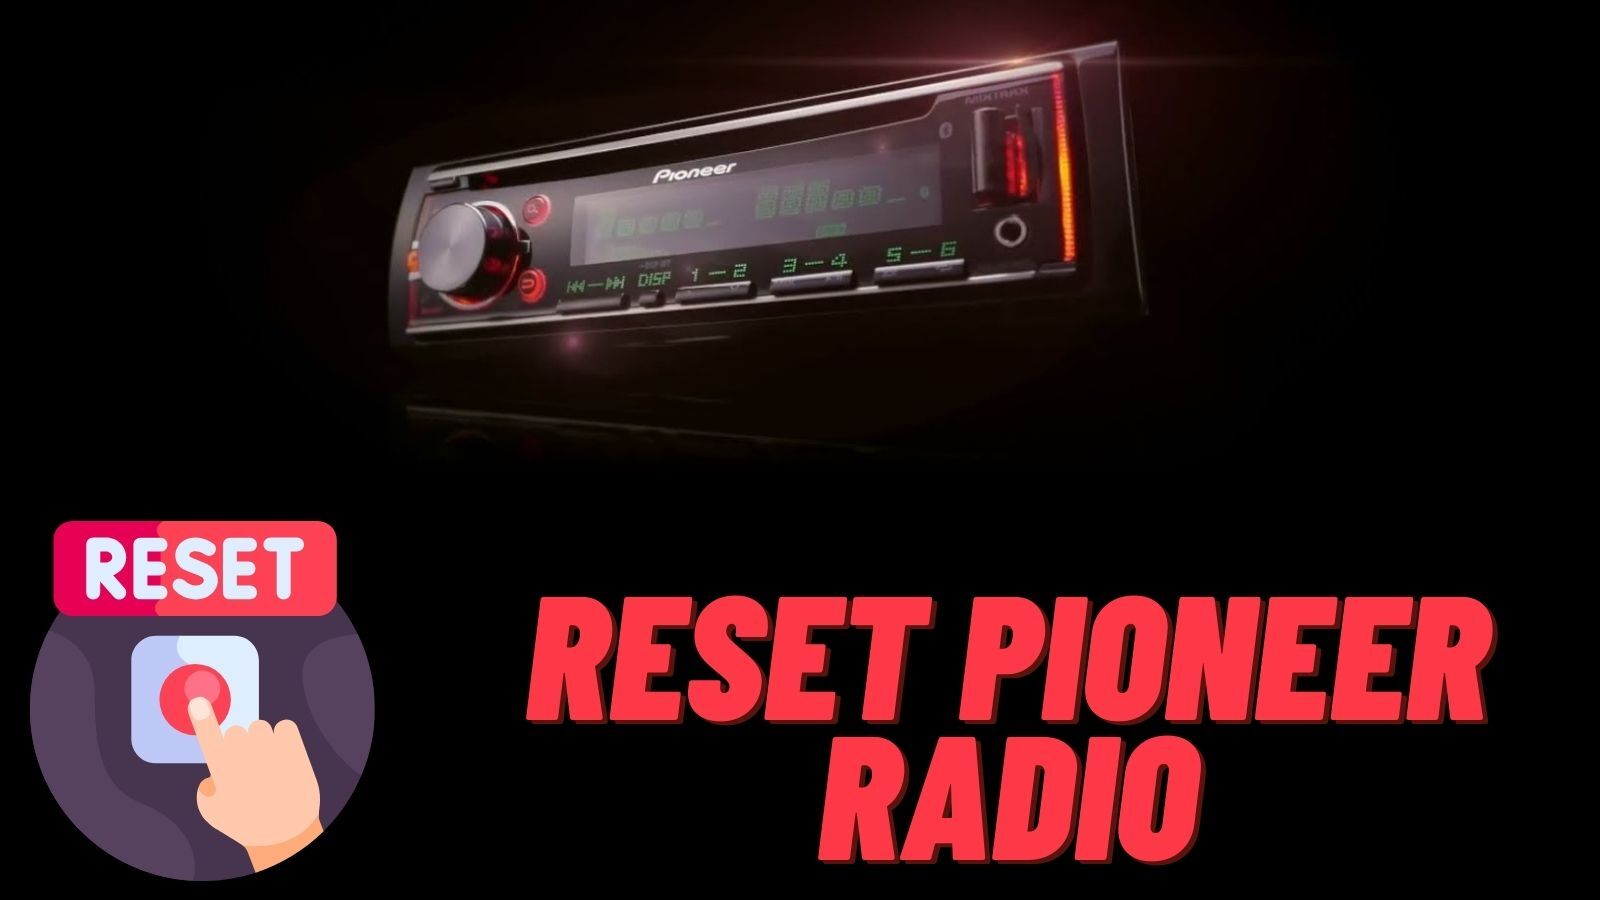 How to Reset Pioneer Radio? (5 Methods)